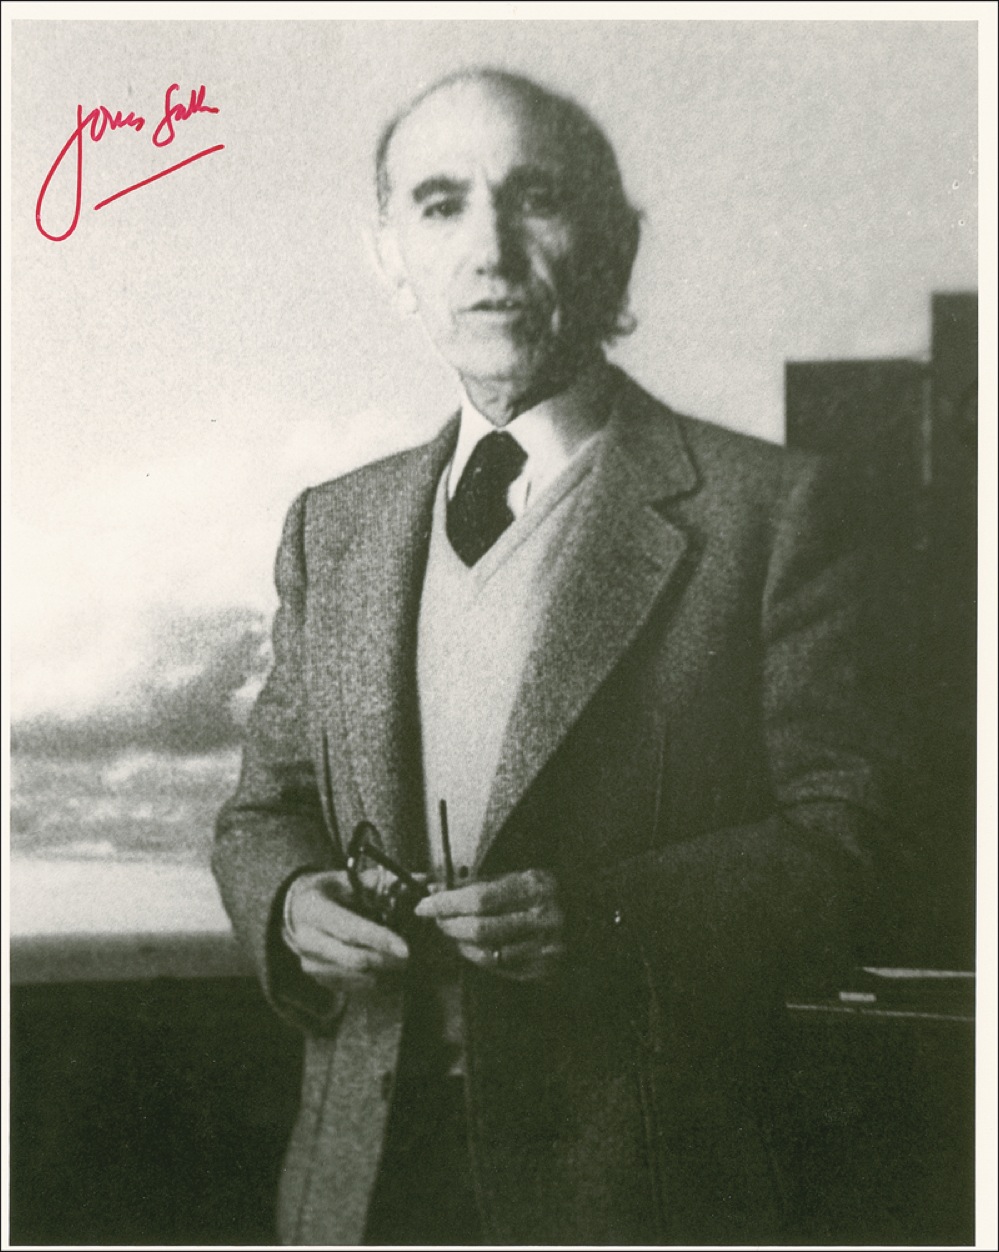 Lot #251 Jonas Salk